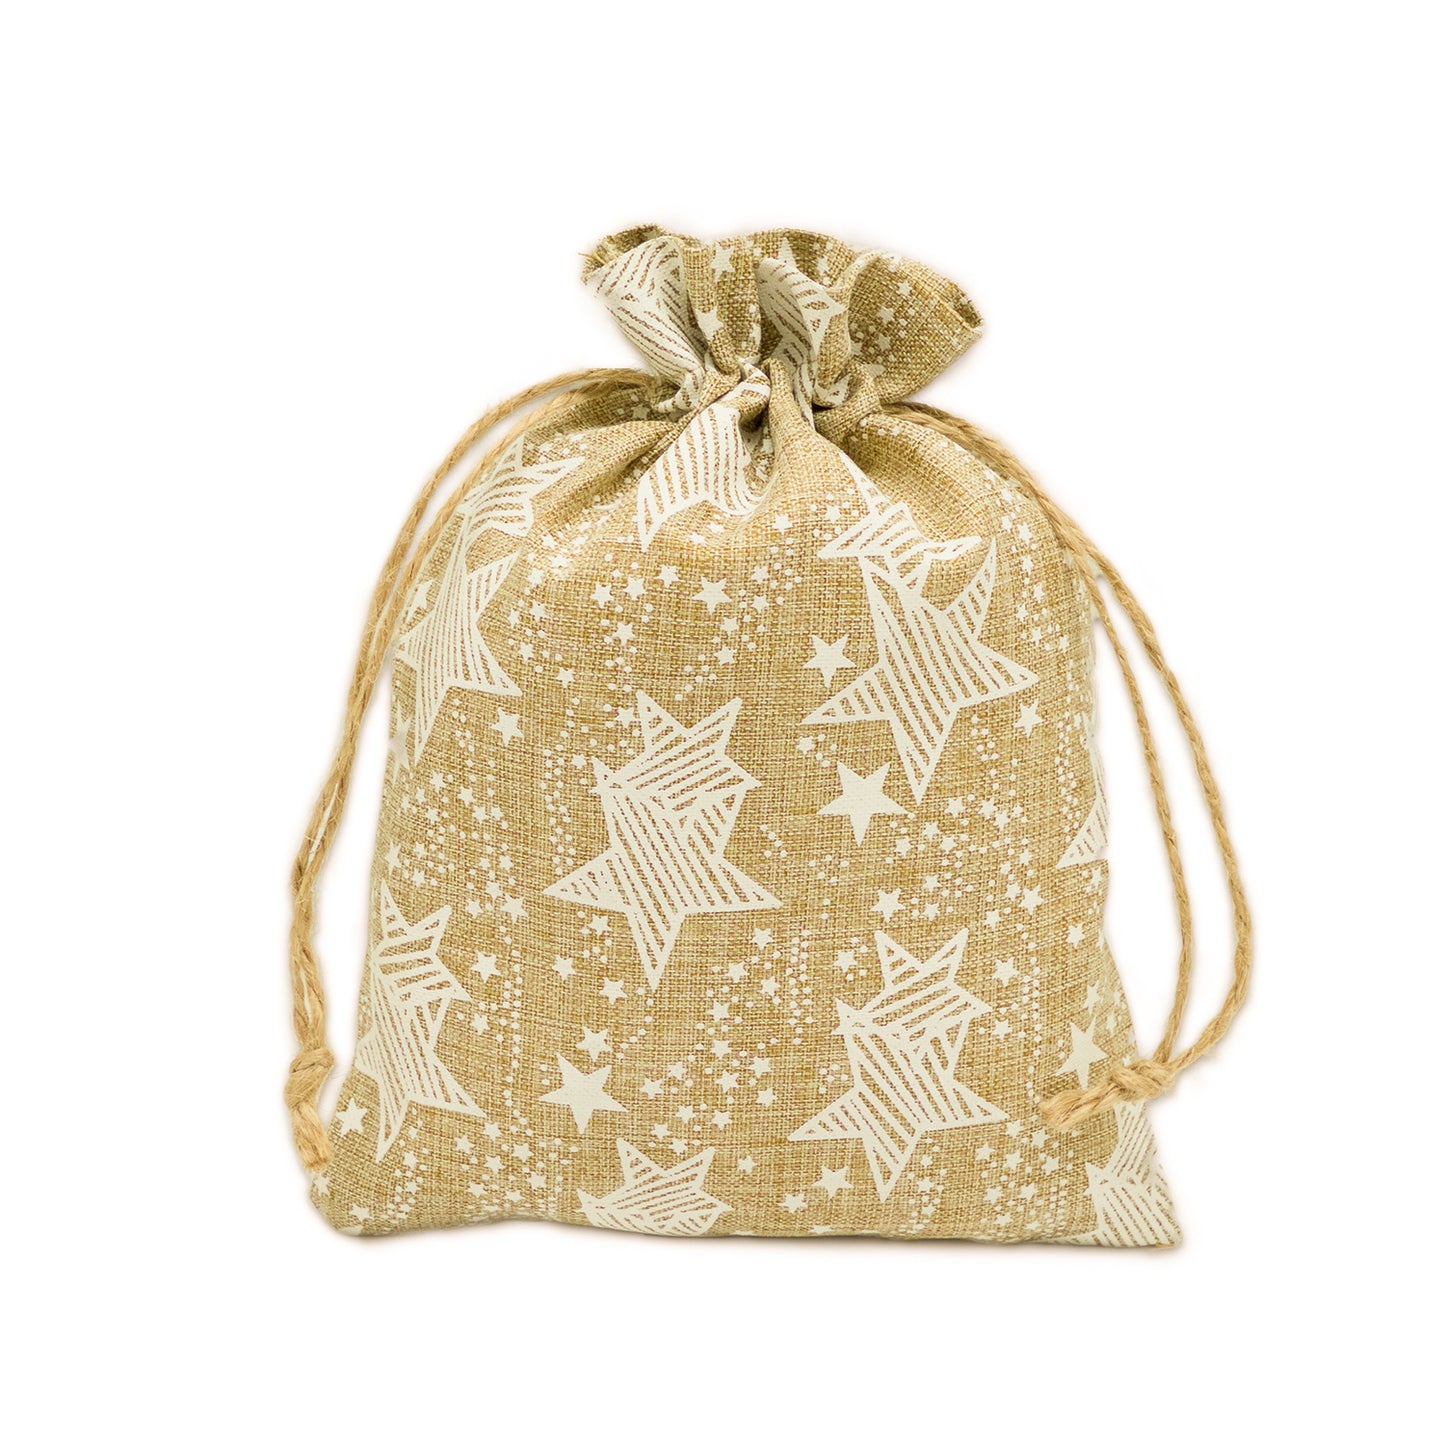 4" x 6" Jute Burlap White Star Drawstring Gift Bags